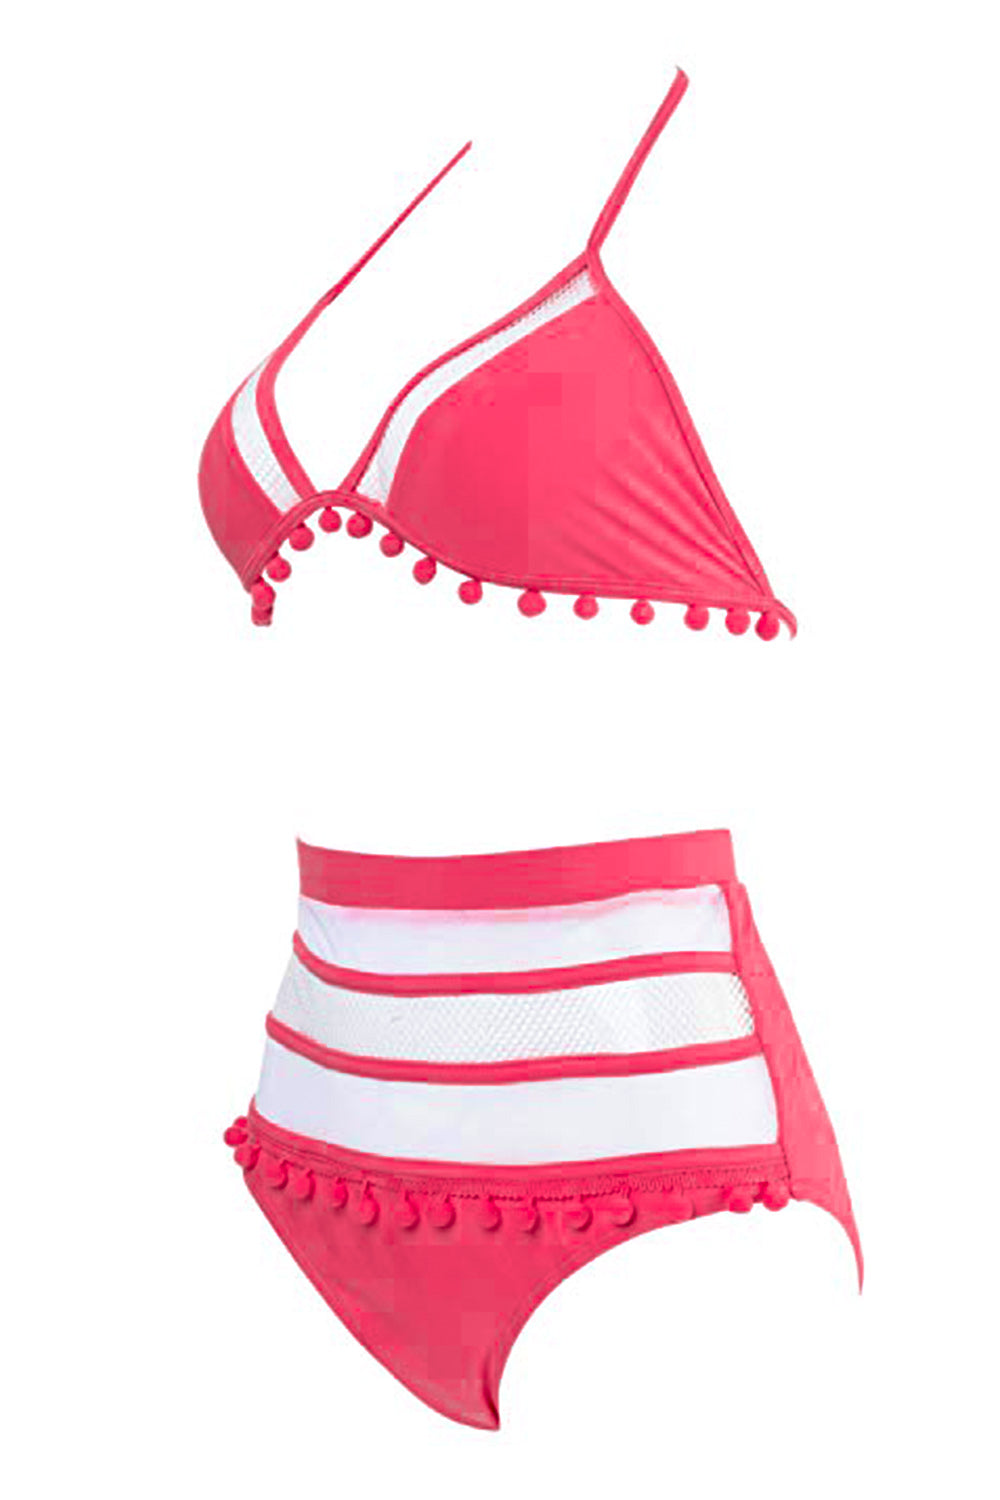 Iyasson Women's High Waist Two Pieces Bikini Set Padded Stripe Tassel Swimsuit